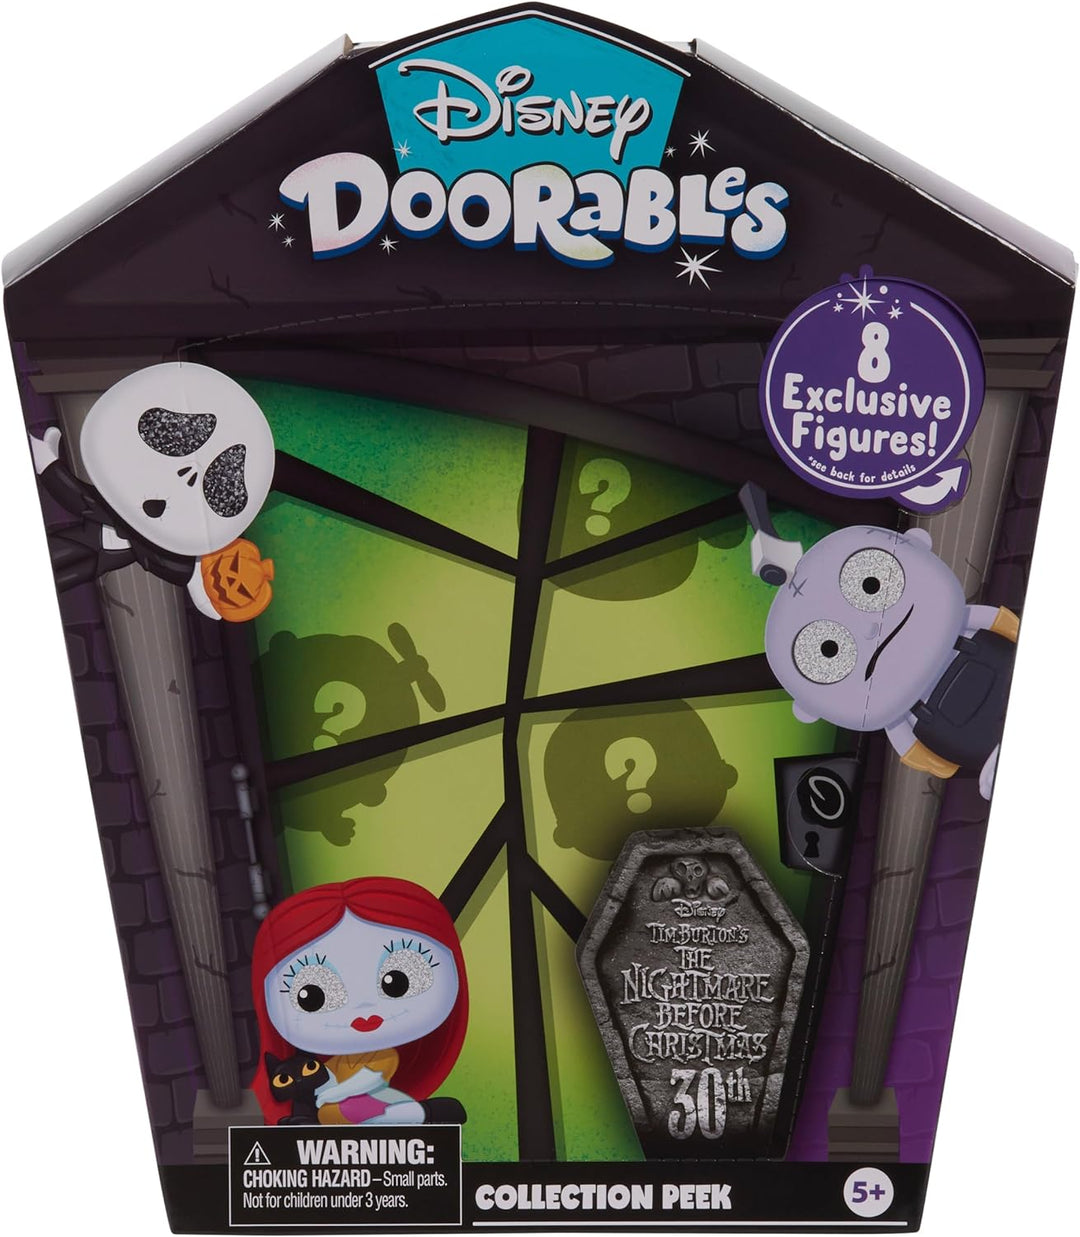 Disney Doorables Tim Burton’s The Nightmare Before Christmas Collector Pack